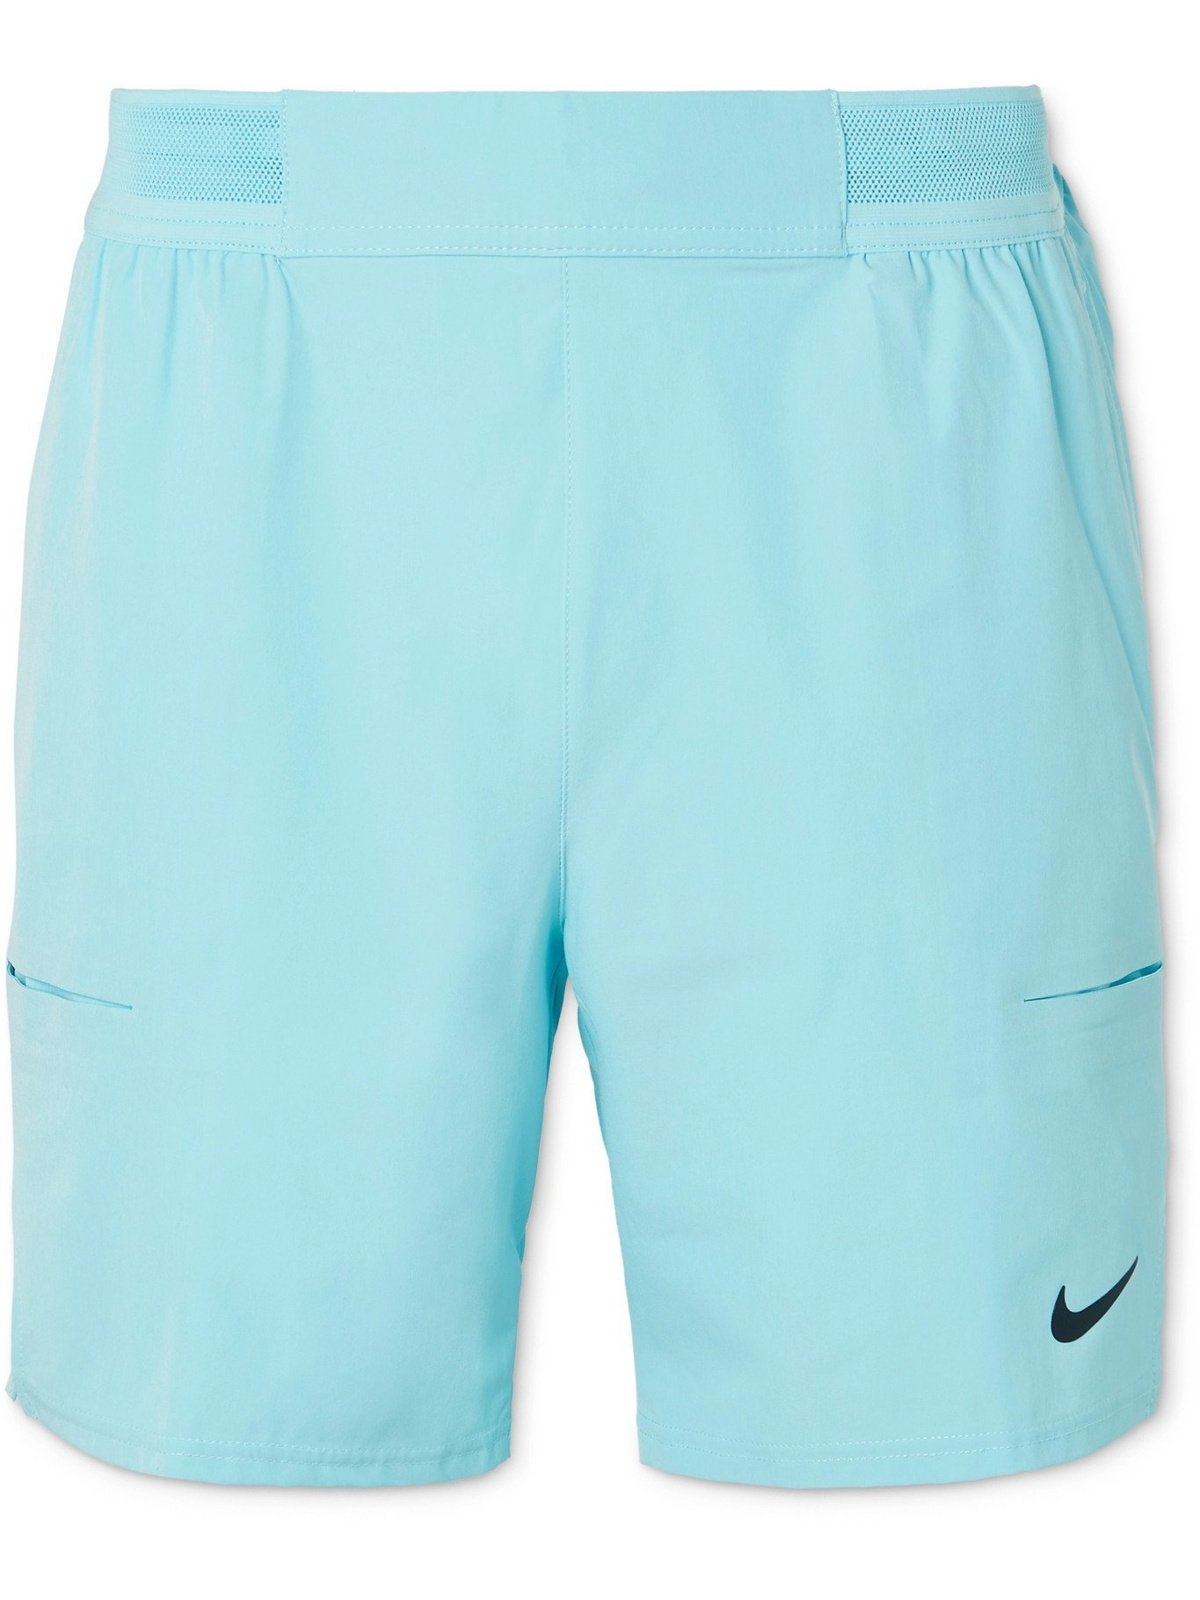 Nike Court Flex Ace 9 Inch Short Pants Grey